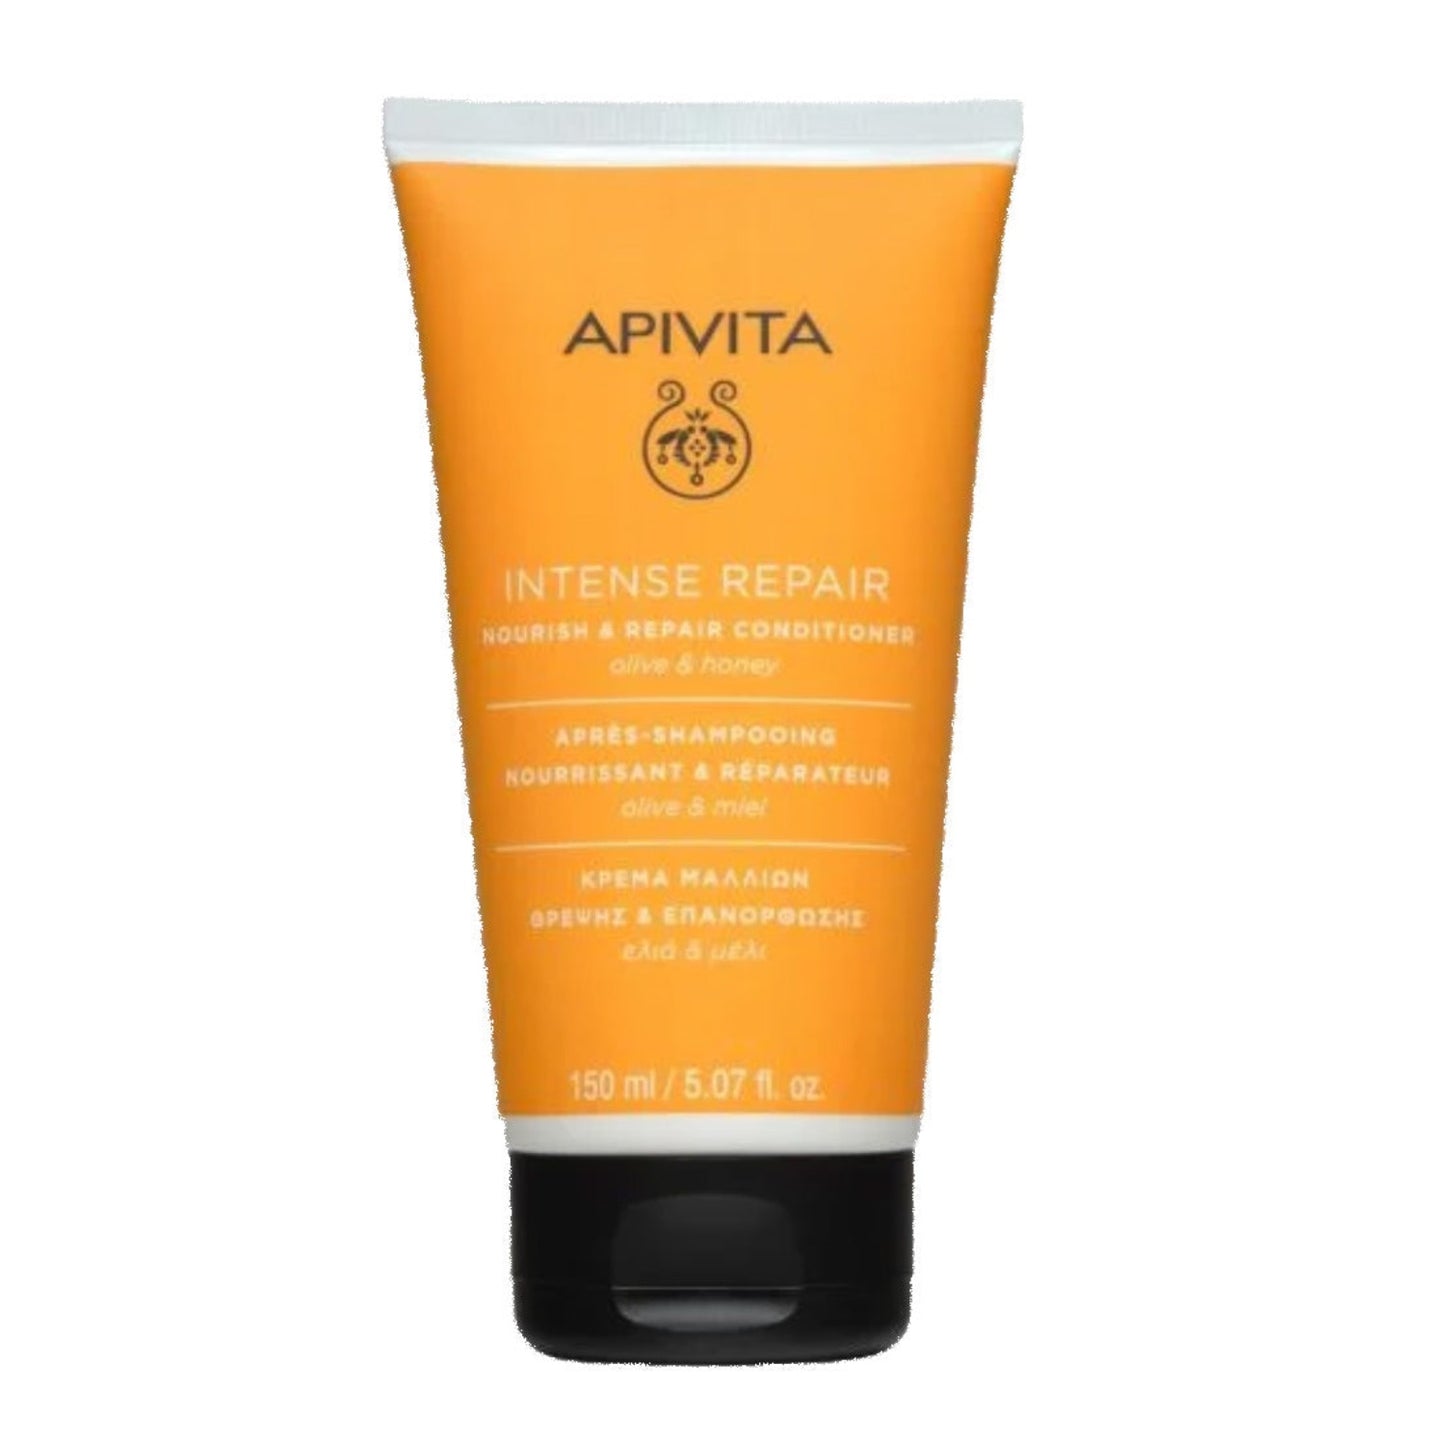 Apivita Intensive Repair - Nourish & Repair Conditioner is specifically designed to repair dry-damaged hair. With 97% natural-origin ingredients.